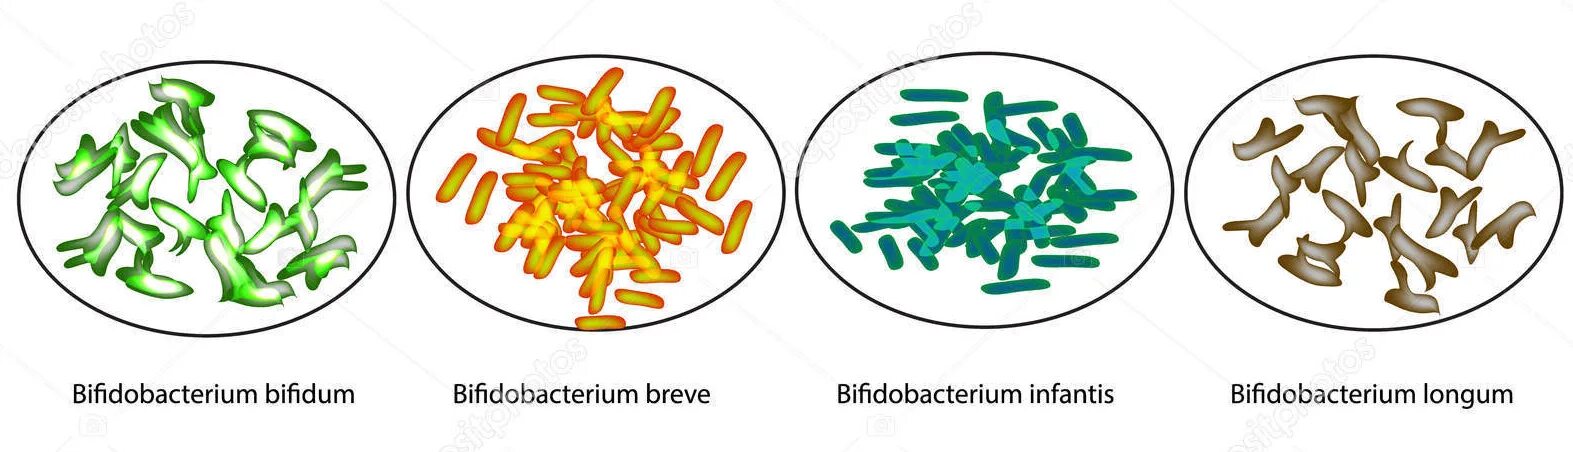 Бифидобактерии содержит. Bifidum бактерии. Микроскопия бифидобактерии бифидум. Bifidobacterium bifidum по Граму. Бактерии Bifidobacterium longum.